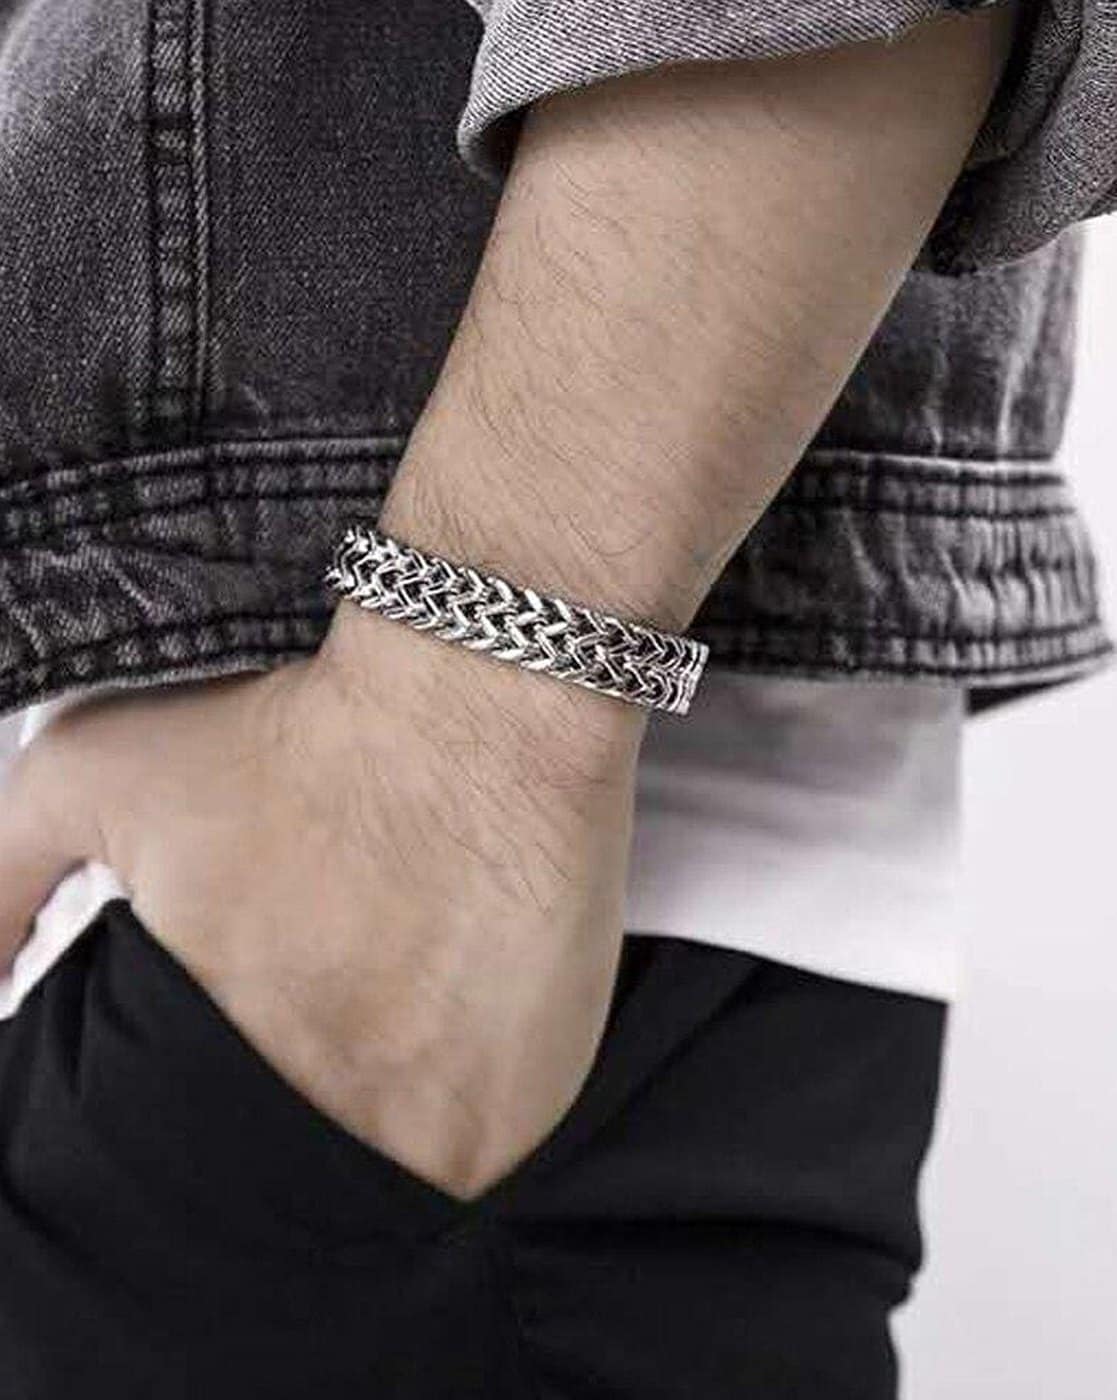 Men's Silver Bracelets: Hot or Not?